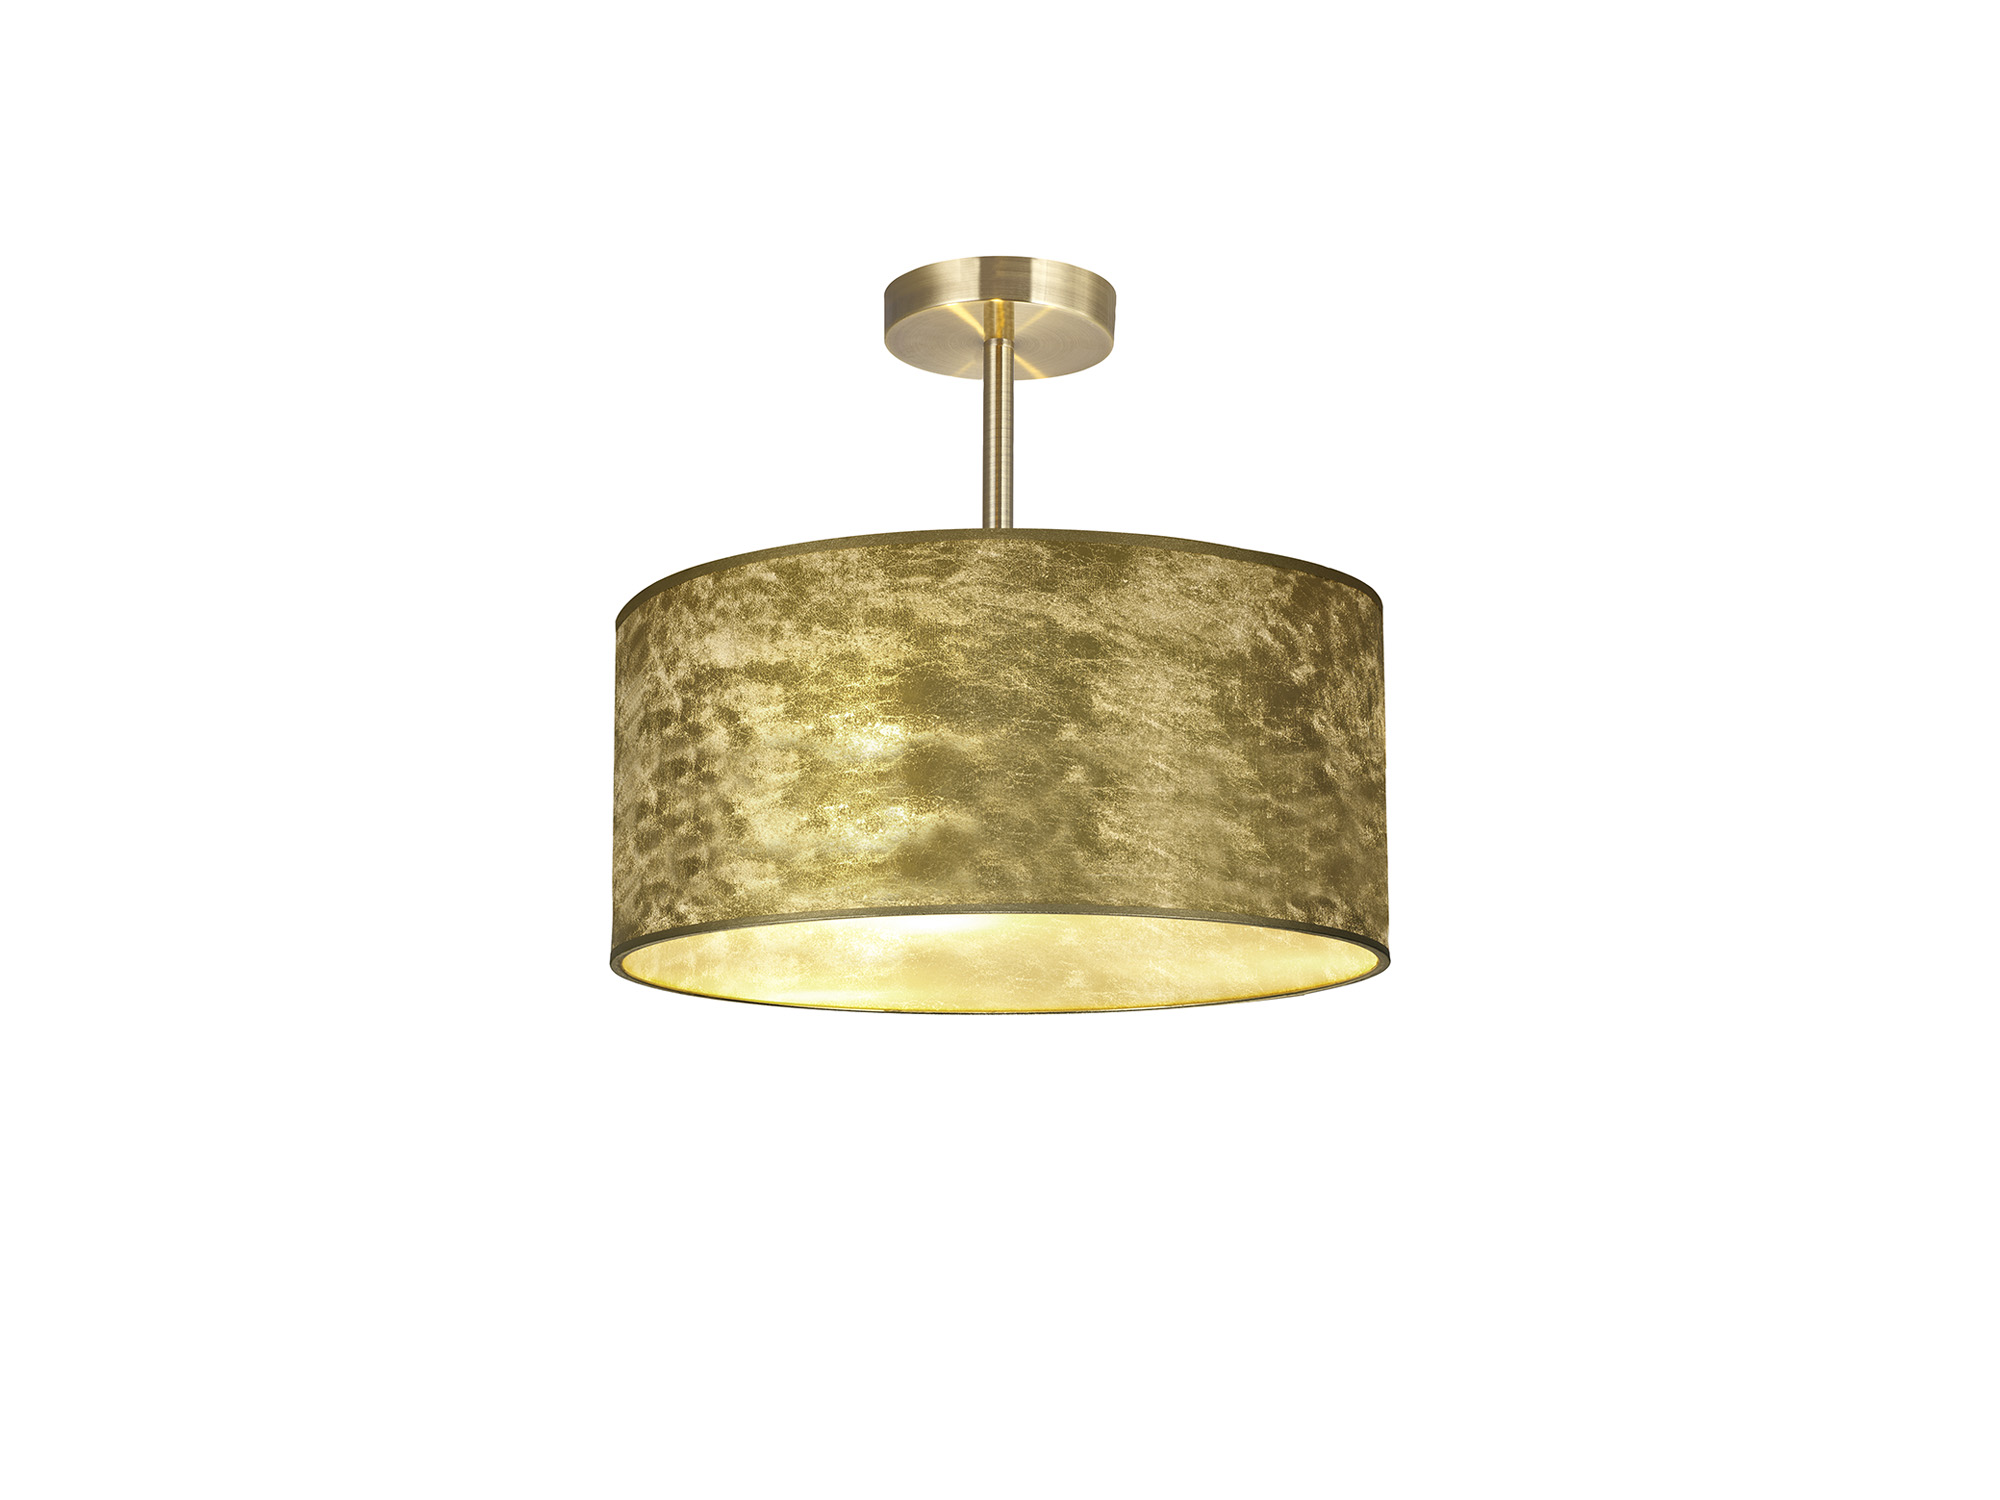 DK0830  Baymont 40cm Semi Flush 3 Light Antique Brass, Gold Leaf